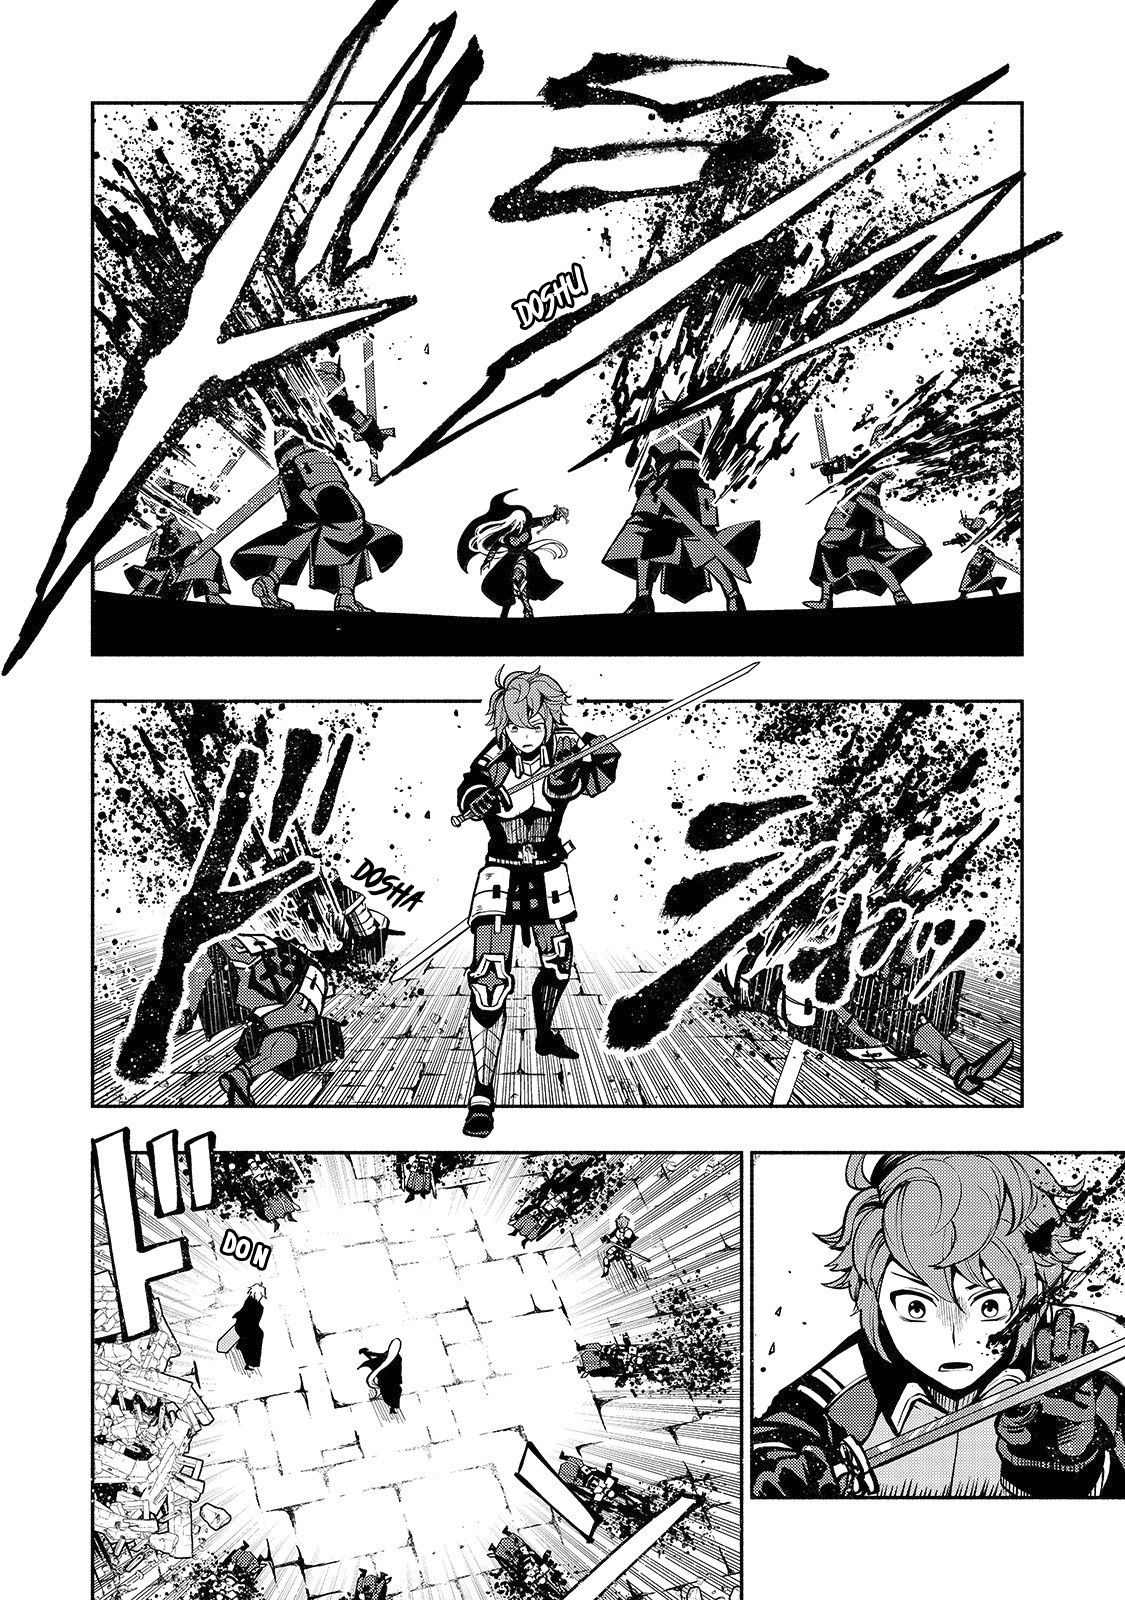 Read The Reincarnated 「Sword Saint」 Wants to Take it Easy Manga English ...